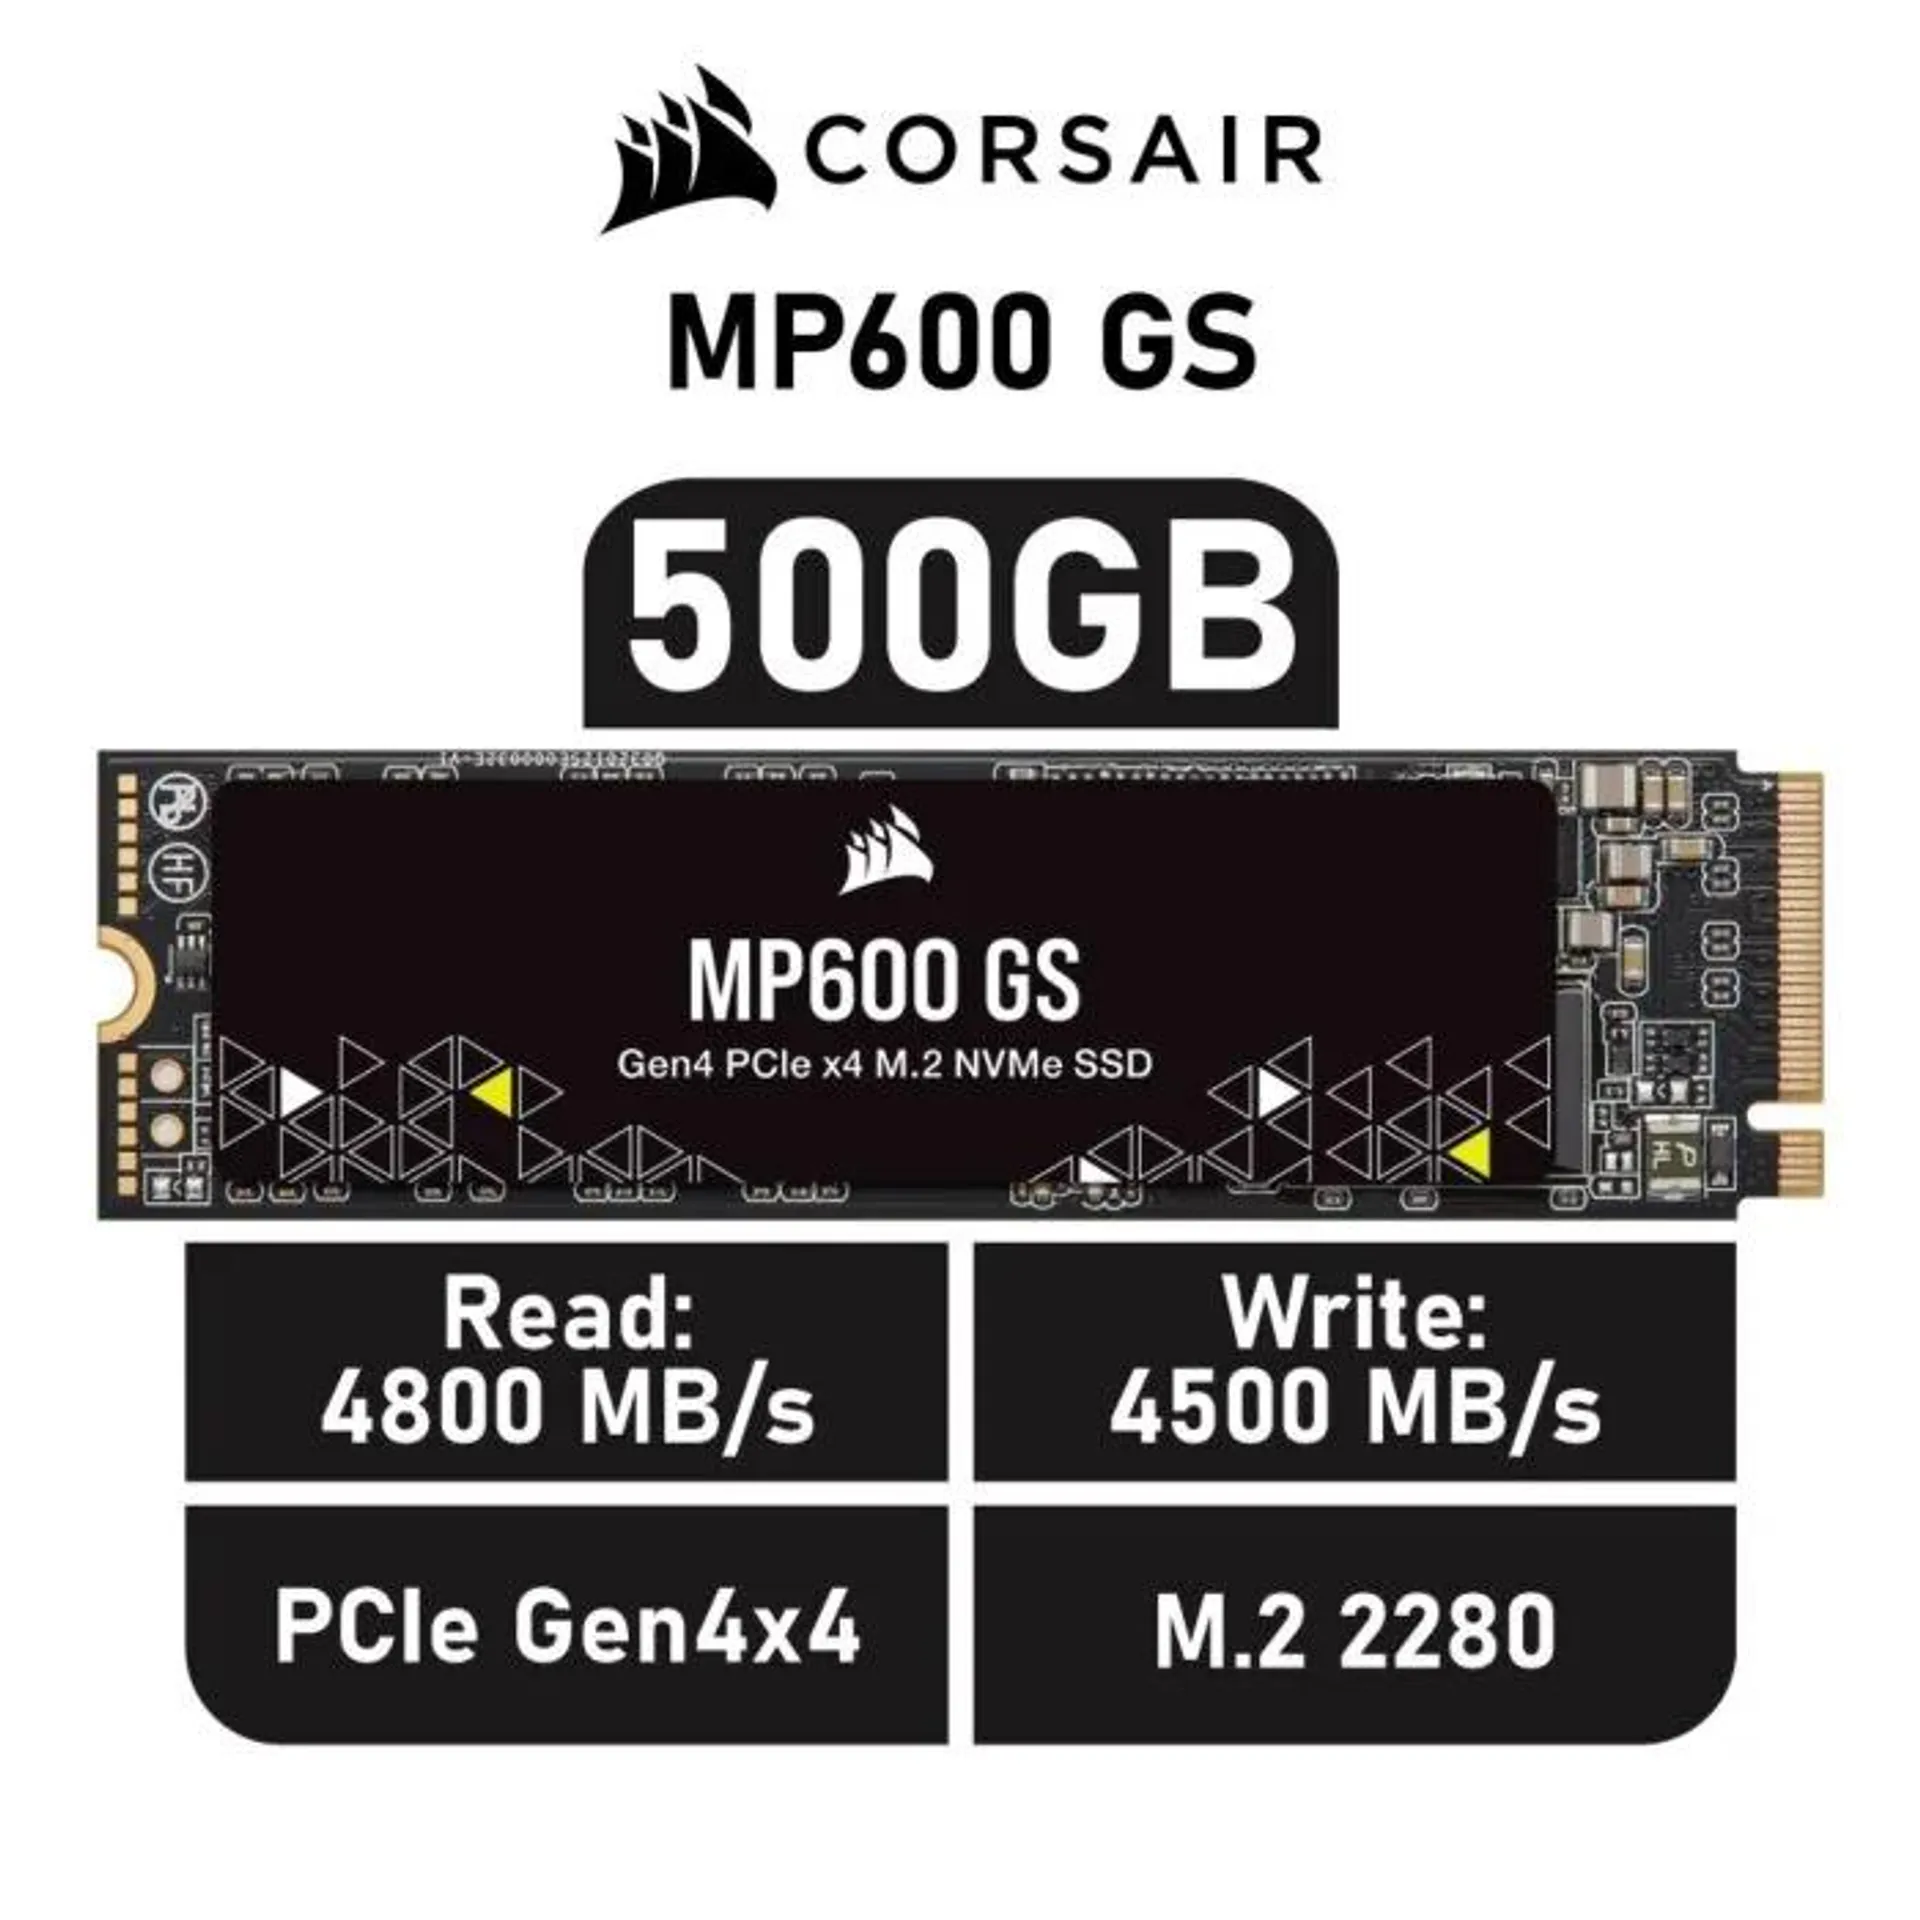 CORSAIR MP600 GS 500GB PCIe Gen4x4 CSSD-F0500GBMP600GS M.2 2280 Solid State Drive